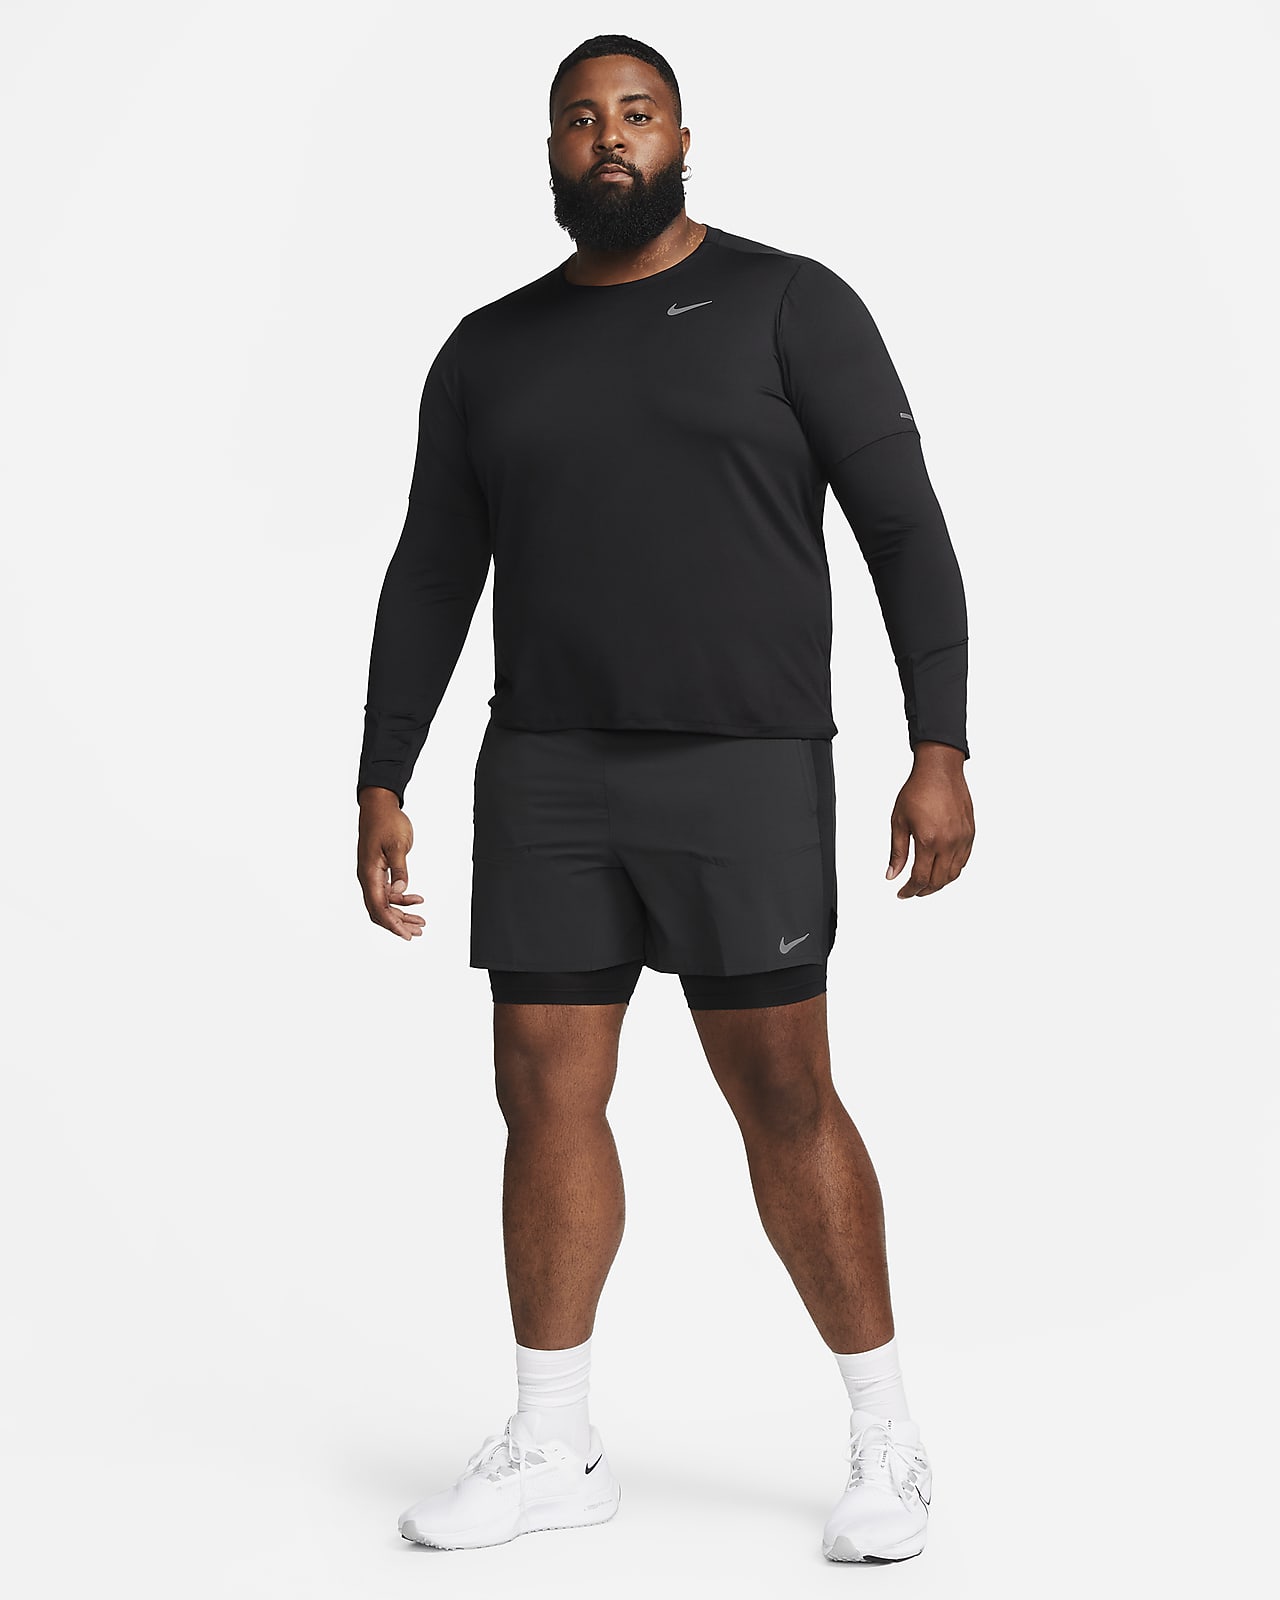 Men Gym Shorts with Tights - Khaki